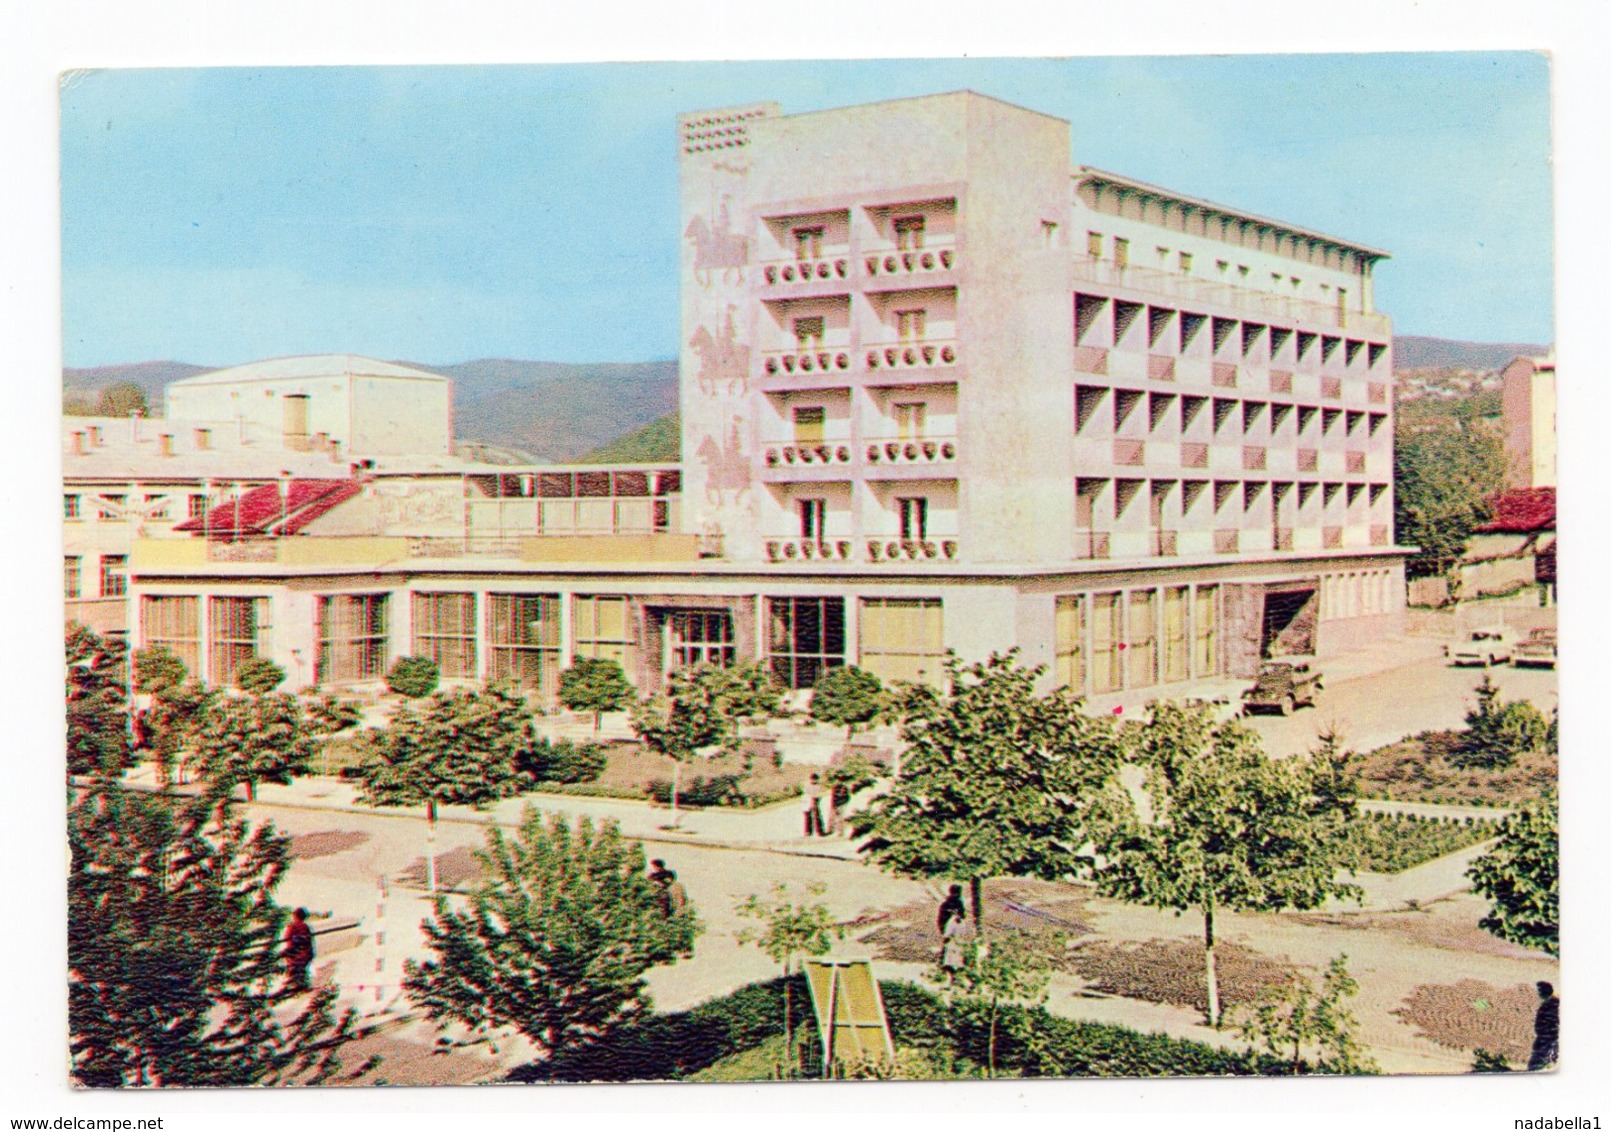 1962 YUGOSLAVIA, SERBIA, KOSOVO POLJE TO BELGRADE, POSTAGE DUE, PRISTINA,HOTEL KOSOVSKI BOZUR,ILLUSTRATED POSTCARD, USED - Postage Due